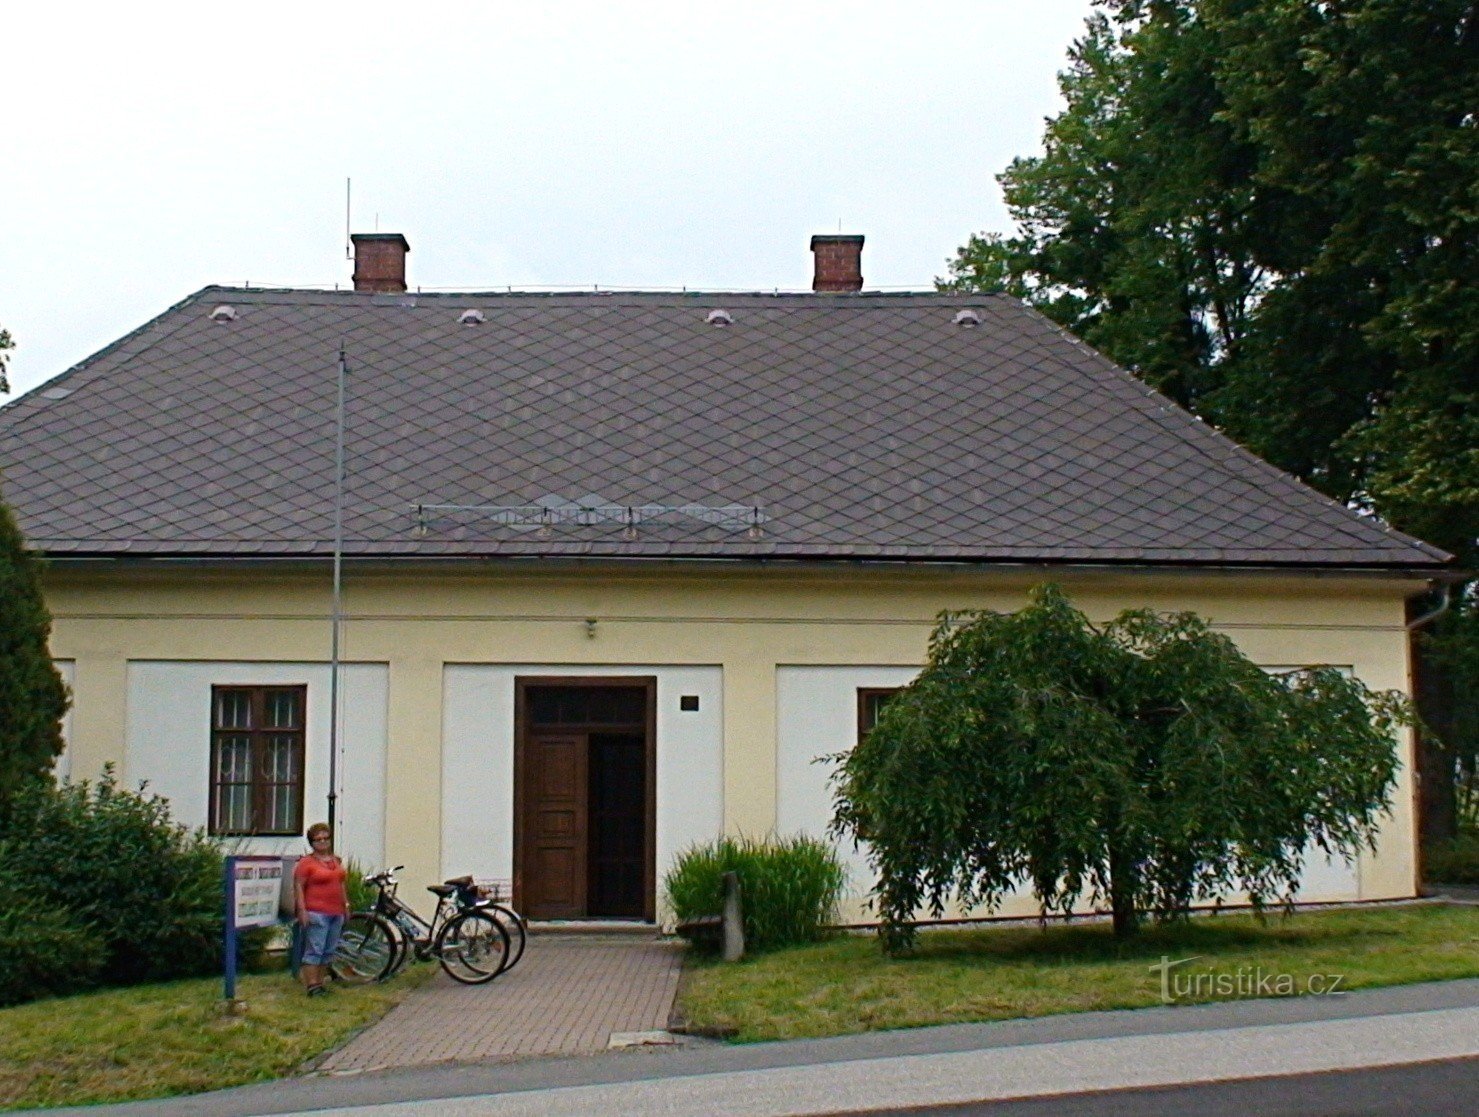 Technisches Museum Petřvald im ehemaligen Pfarrhaus